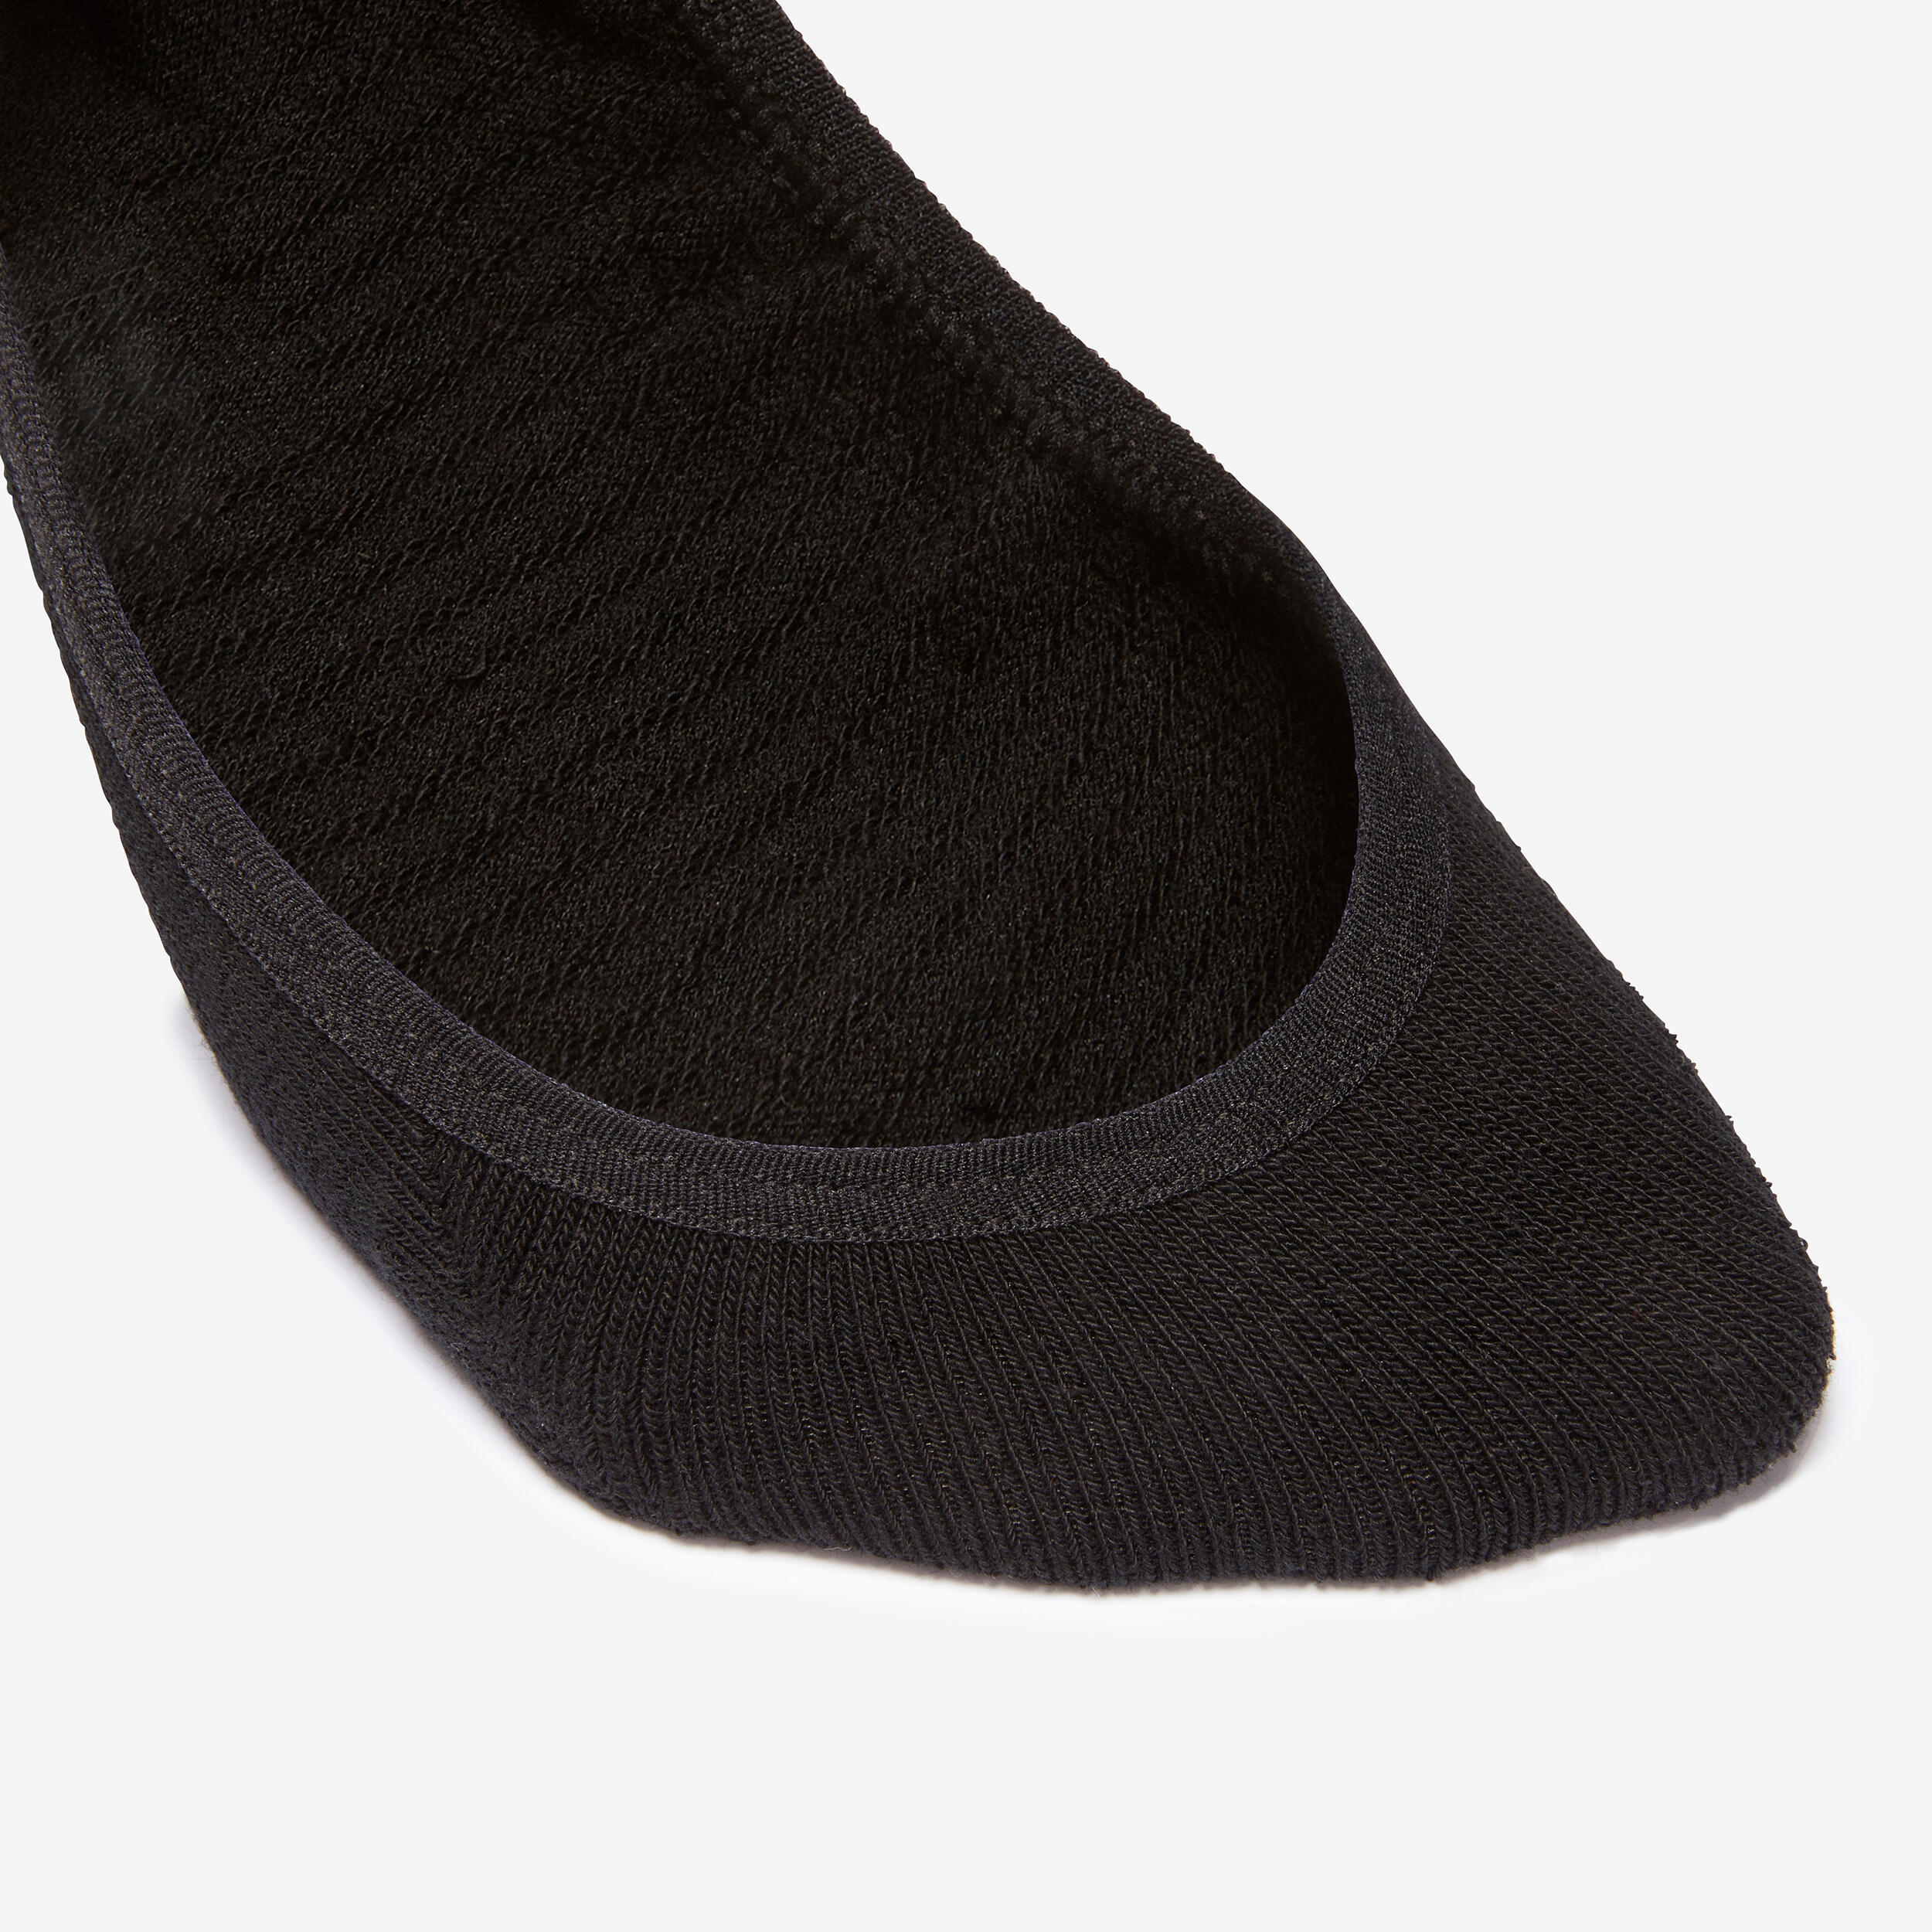 Low Ballerina Socks - Deocell Tech URBAN WALK pack of 2 pairs - black 3/5